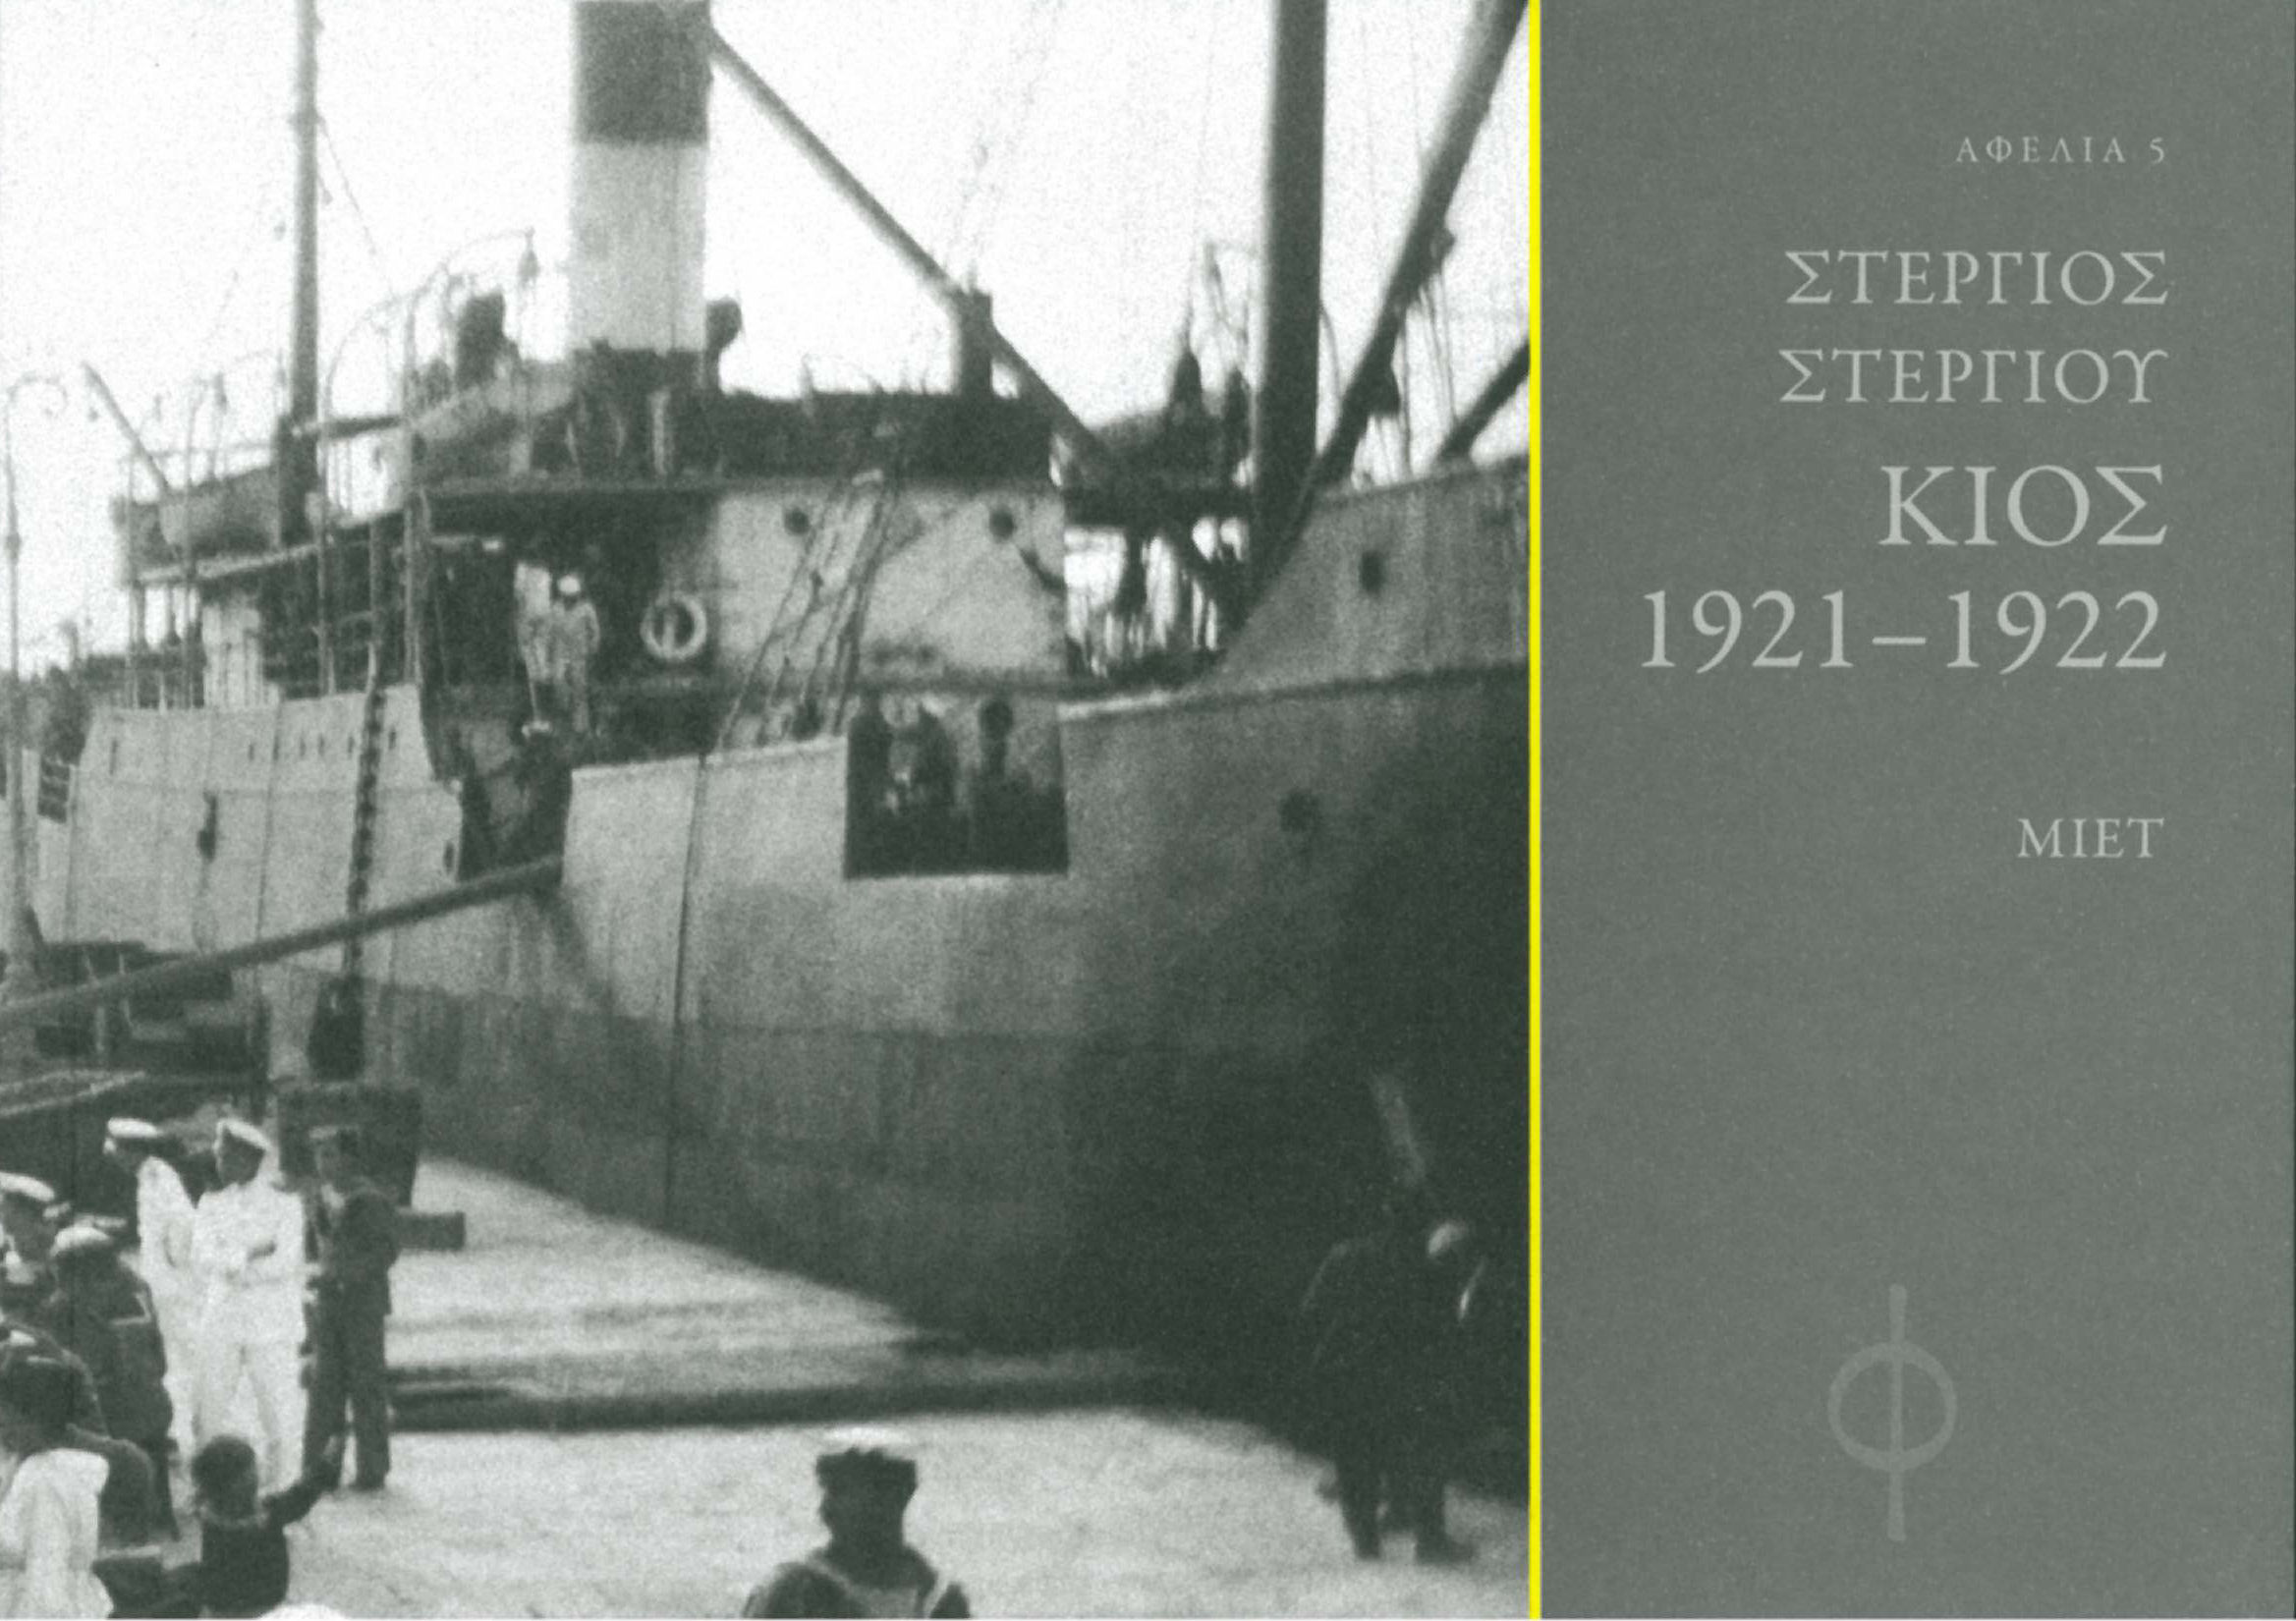 stergios-stergiou-kios-1921-1922